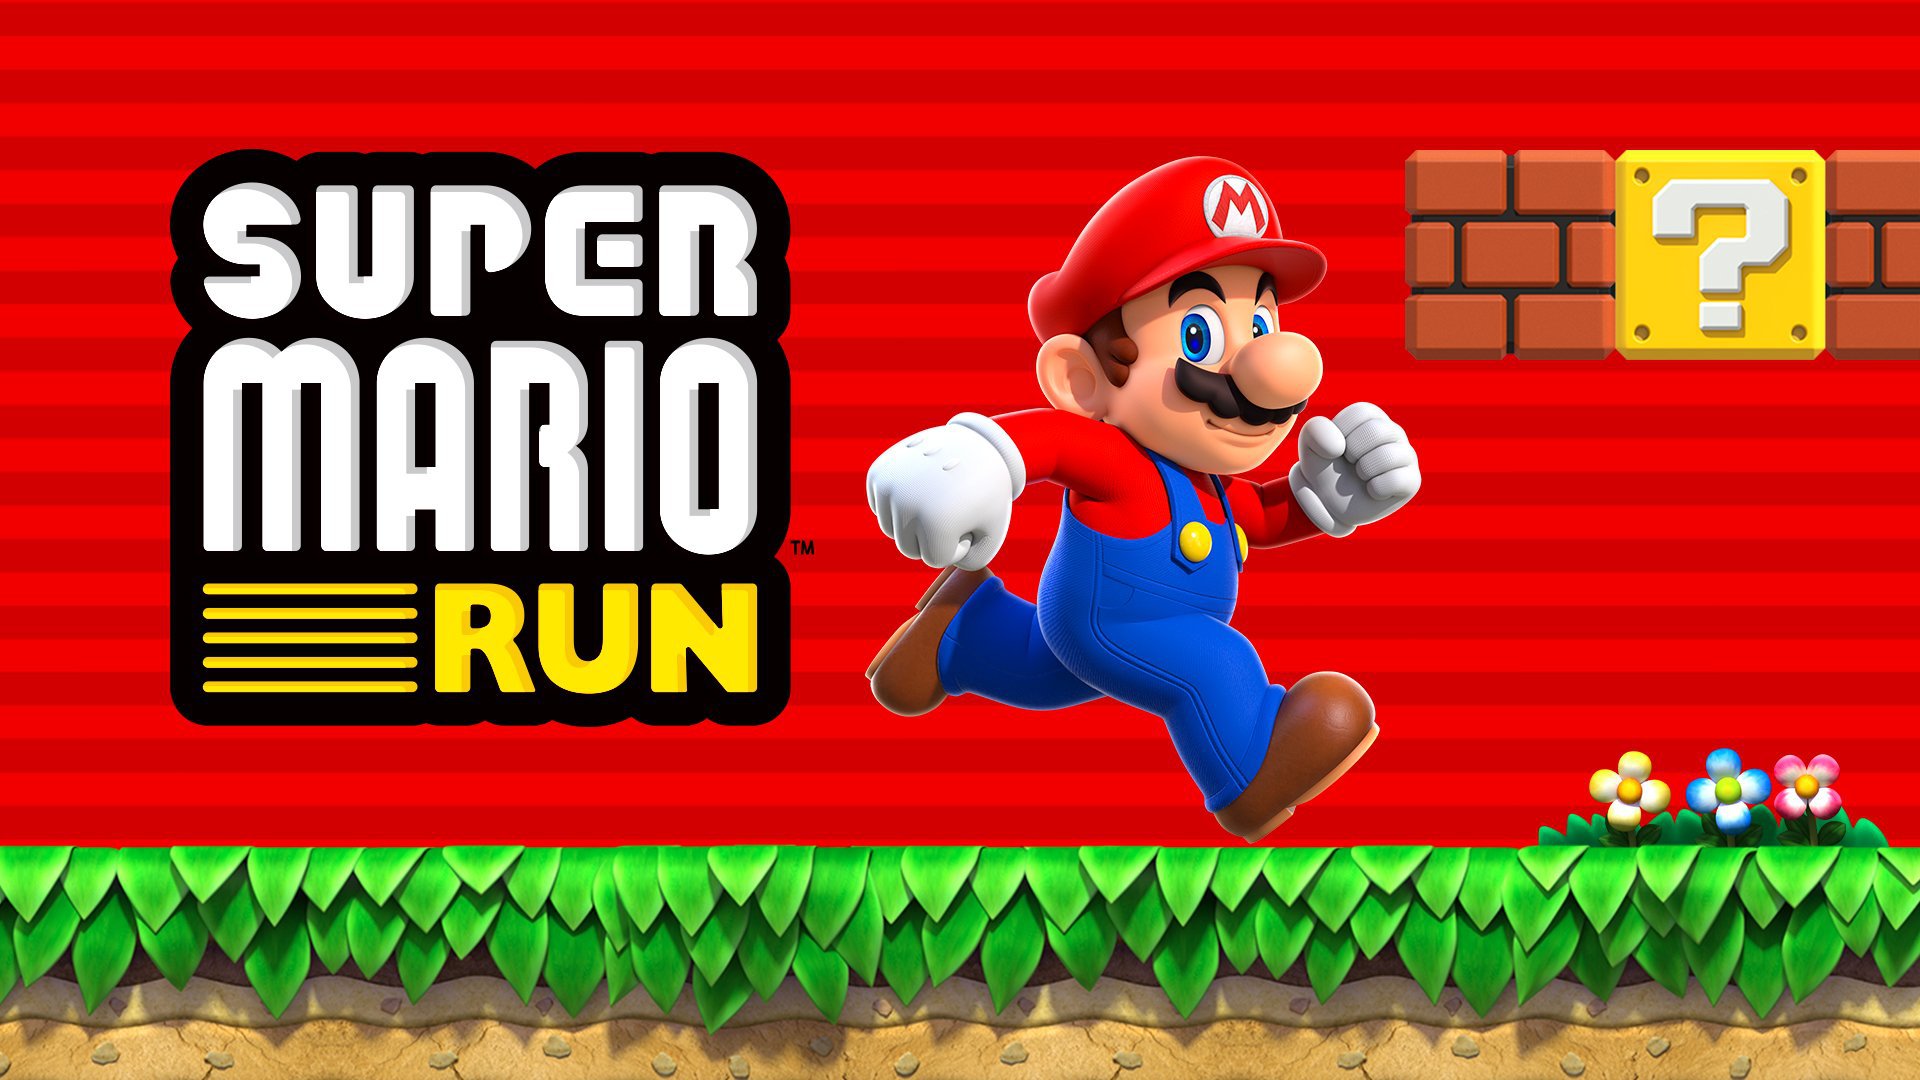 En este momento estás viendo “Super Mario Run” estará disponible para Android a partir de marzo